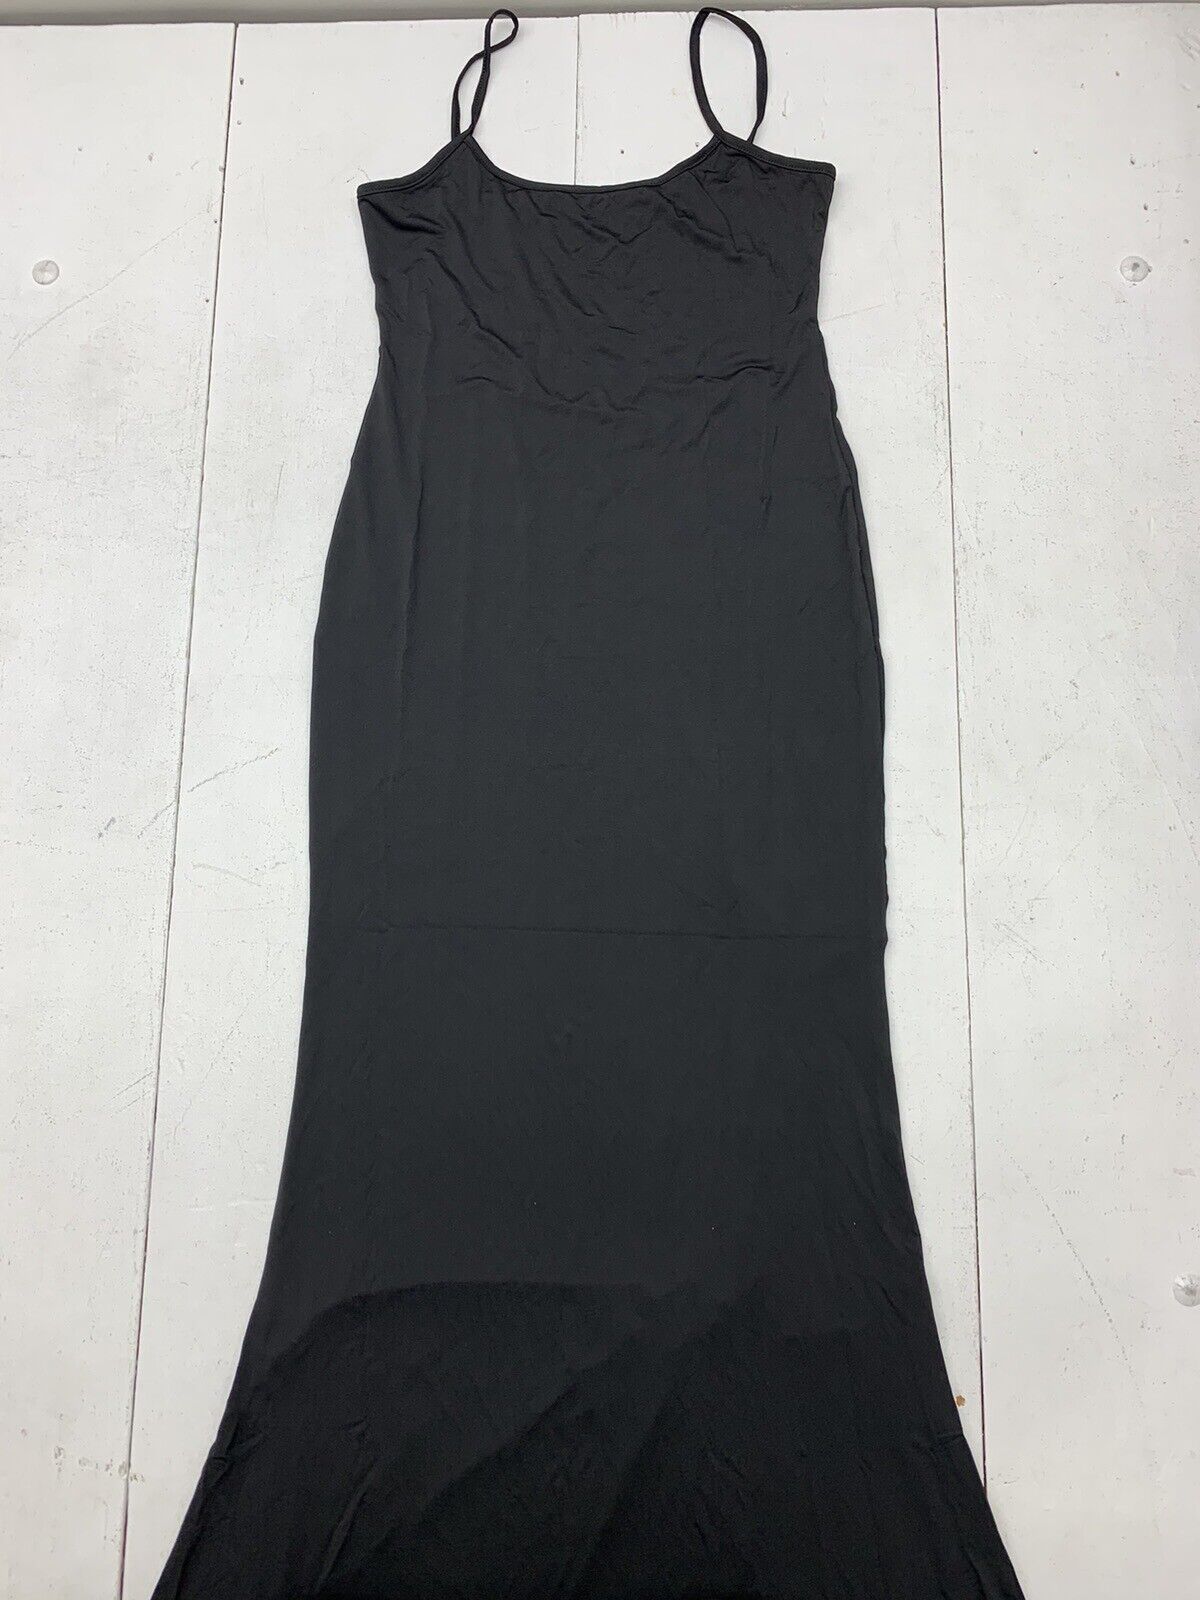 Unbranded Womens Black Long Tank Dress Size Large - beyond exchange